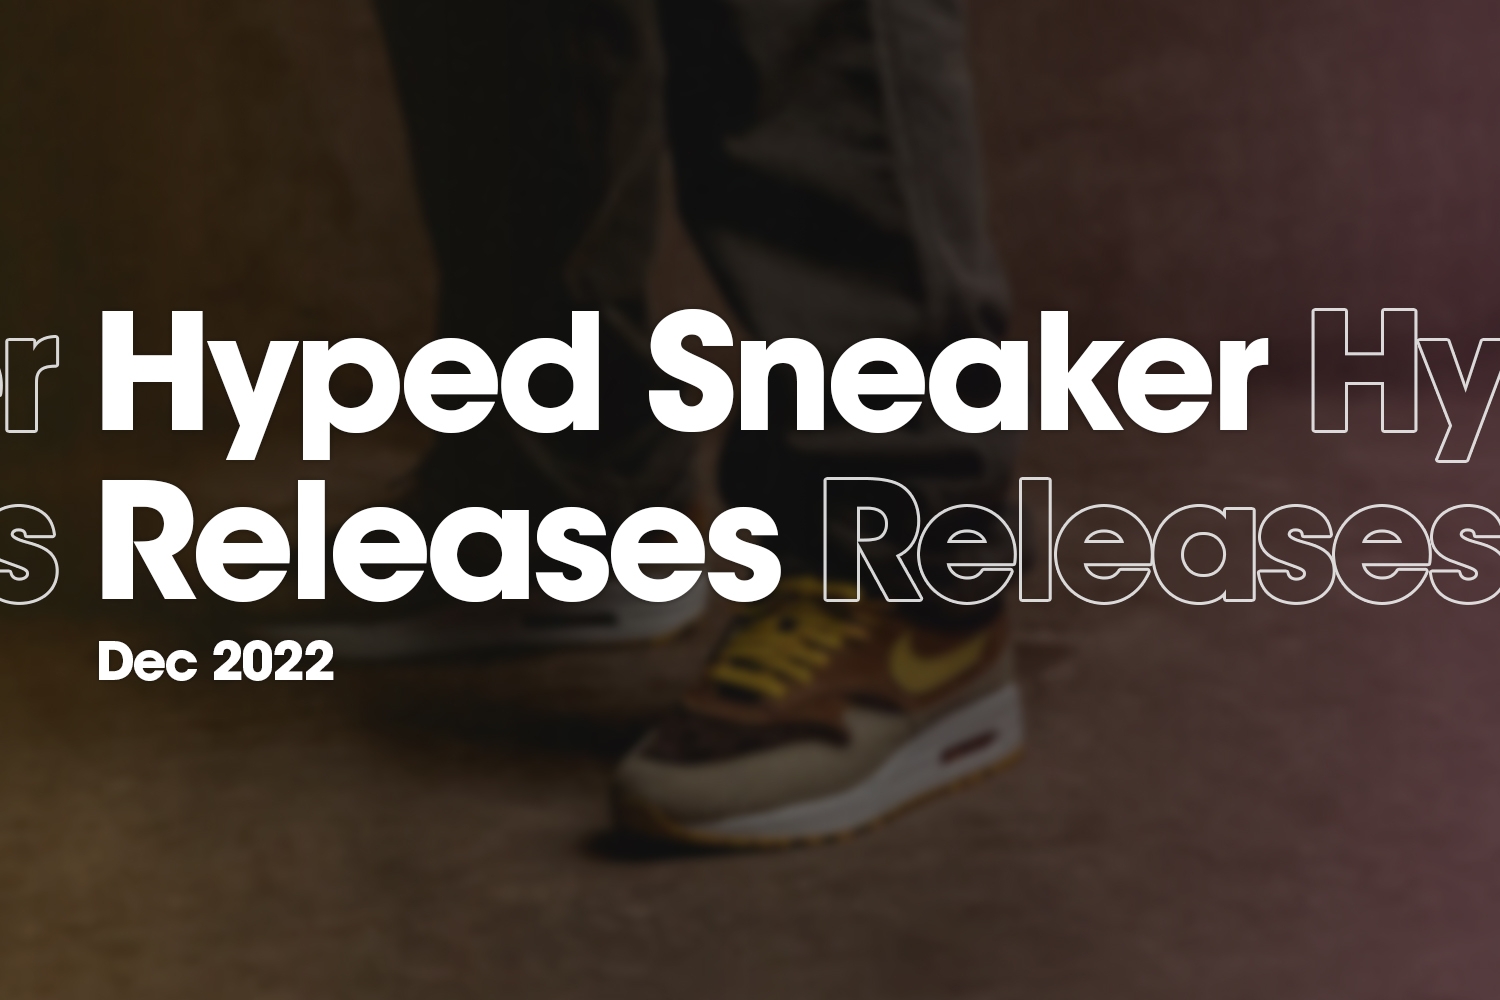 Hyped Sneaker Releases van december 2022